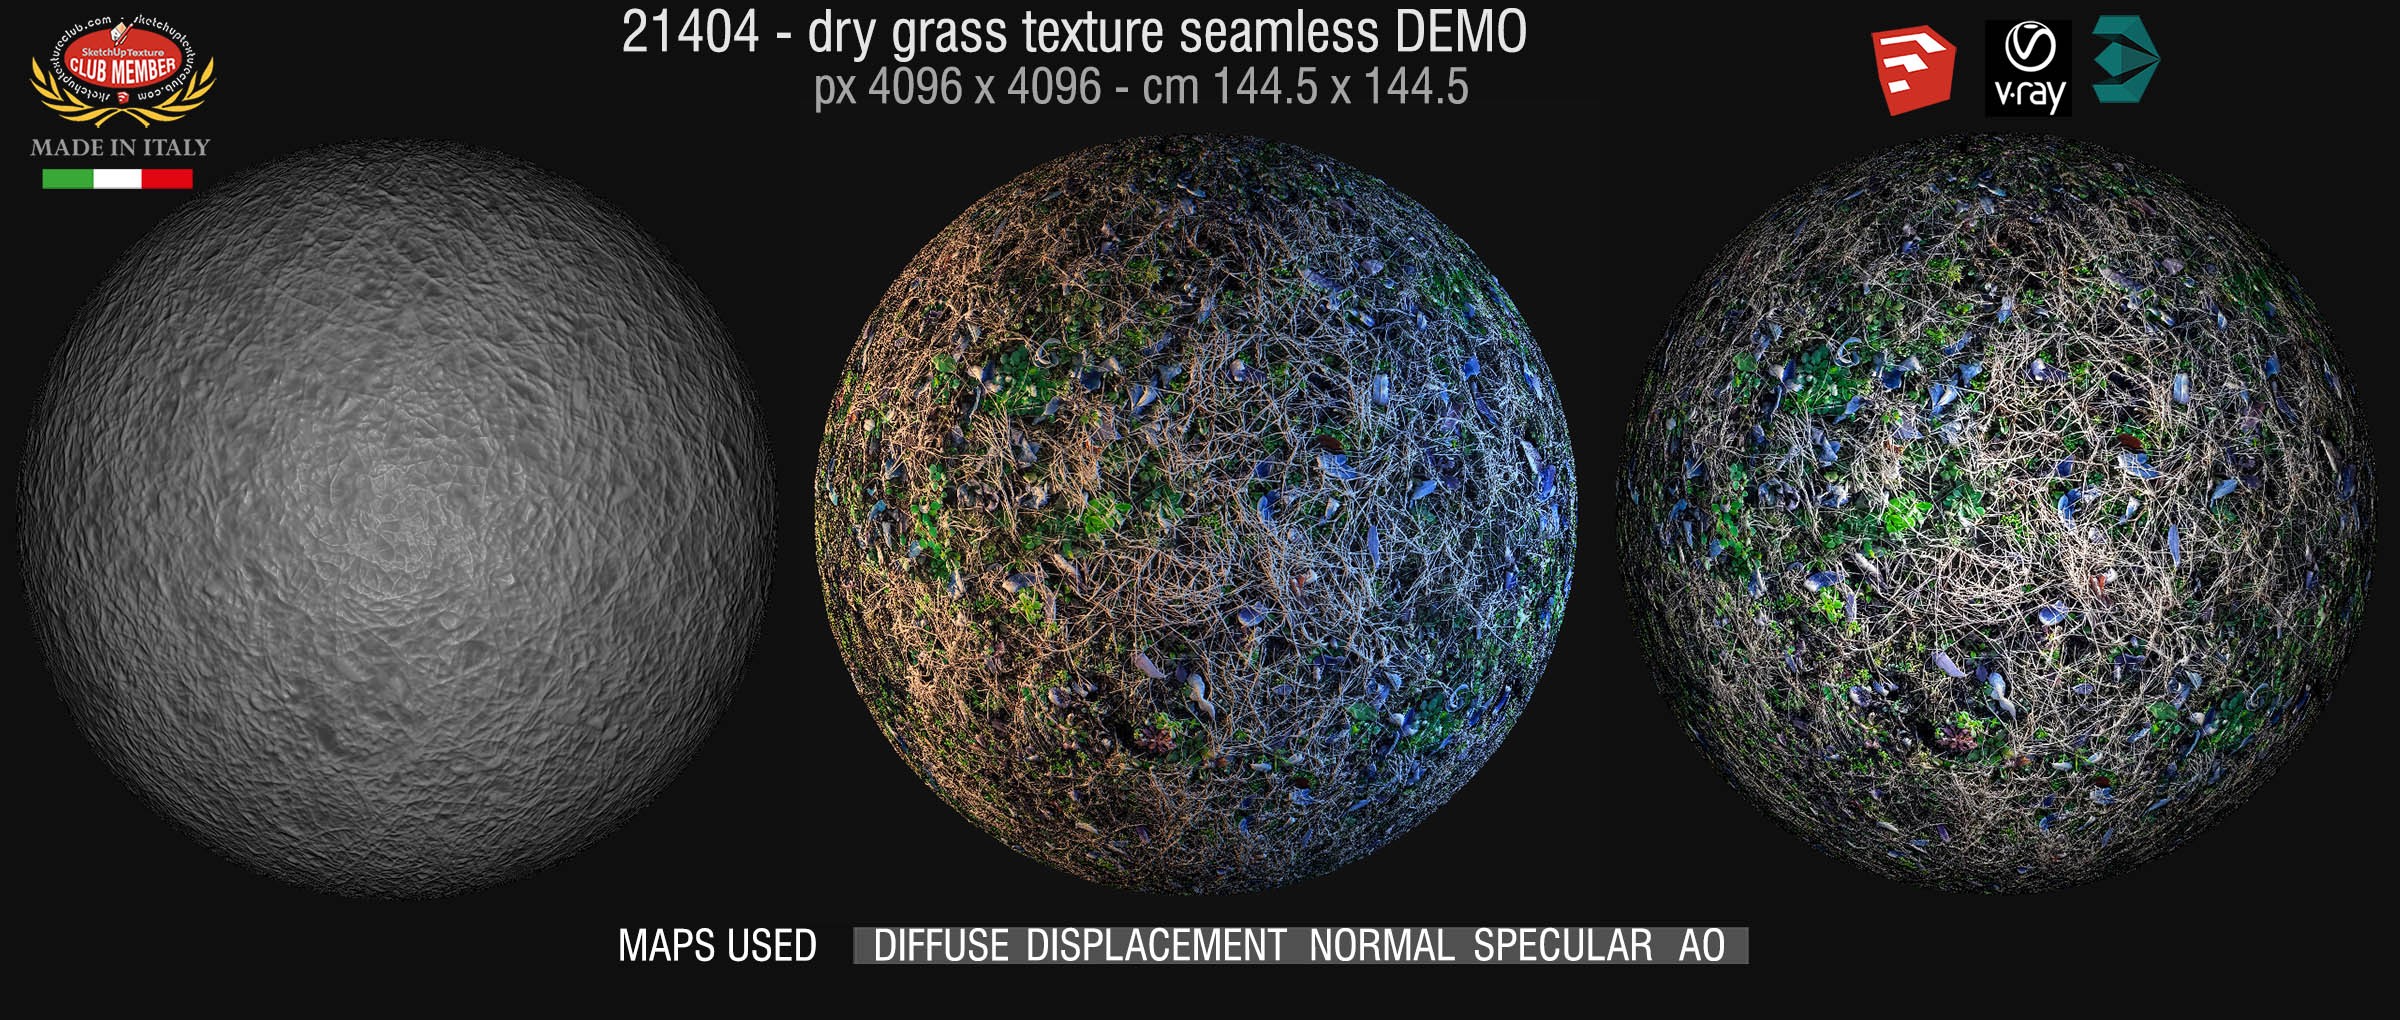 21404 dry grass texture seamless + maps DEMO